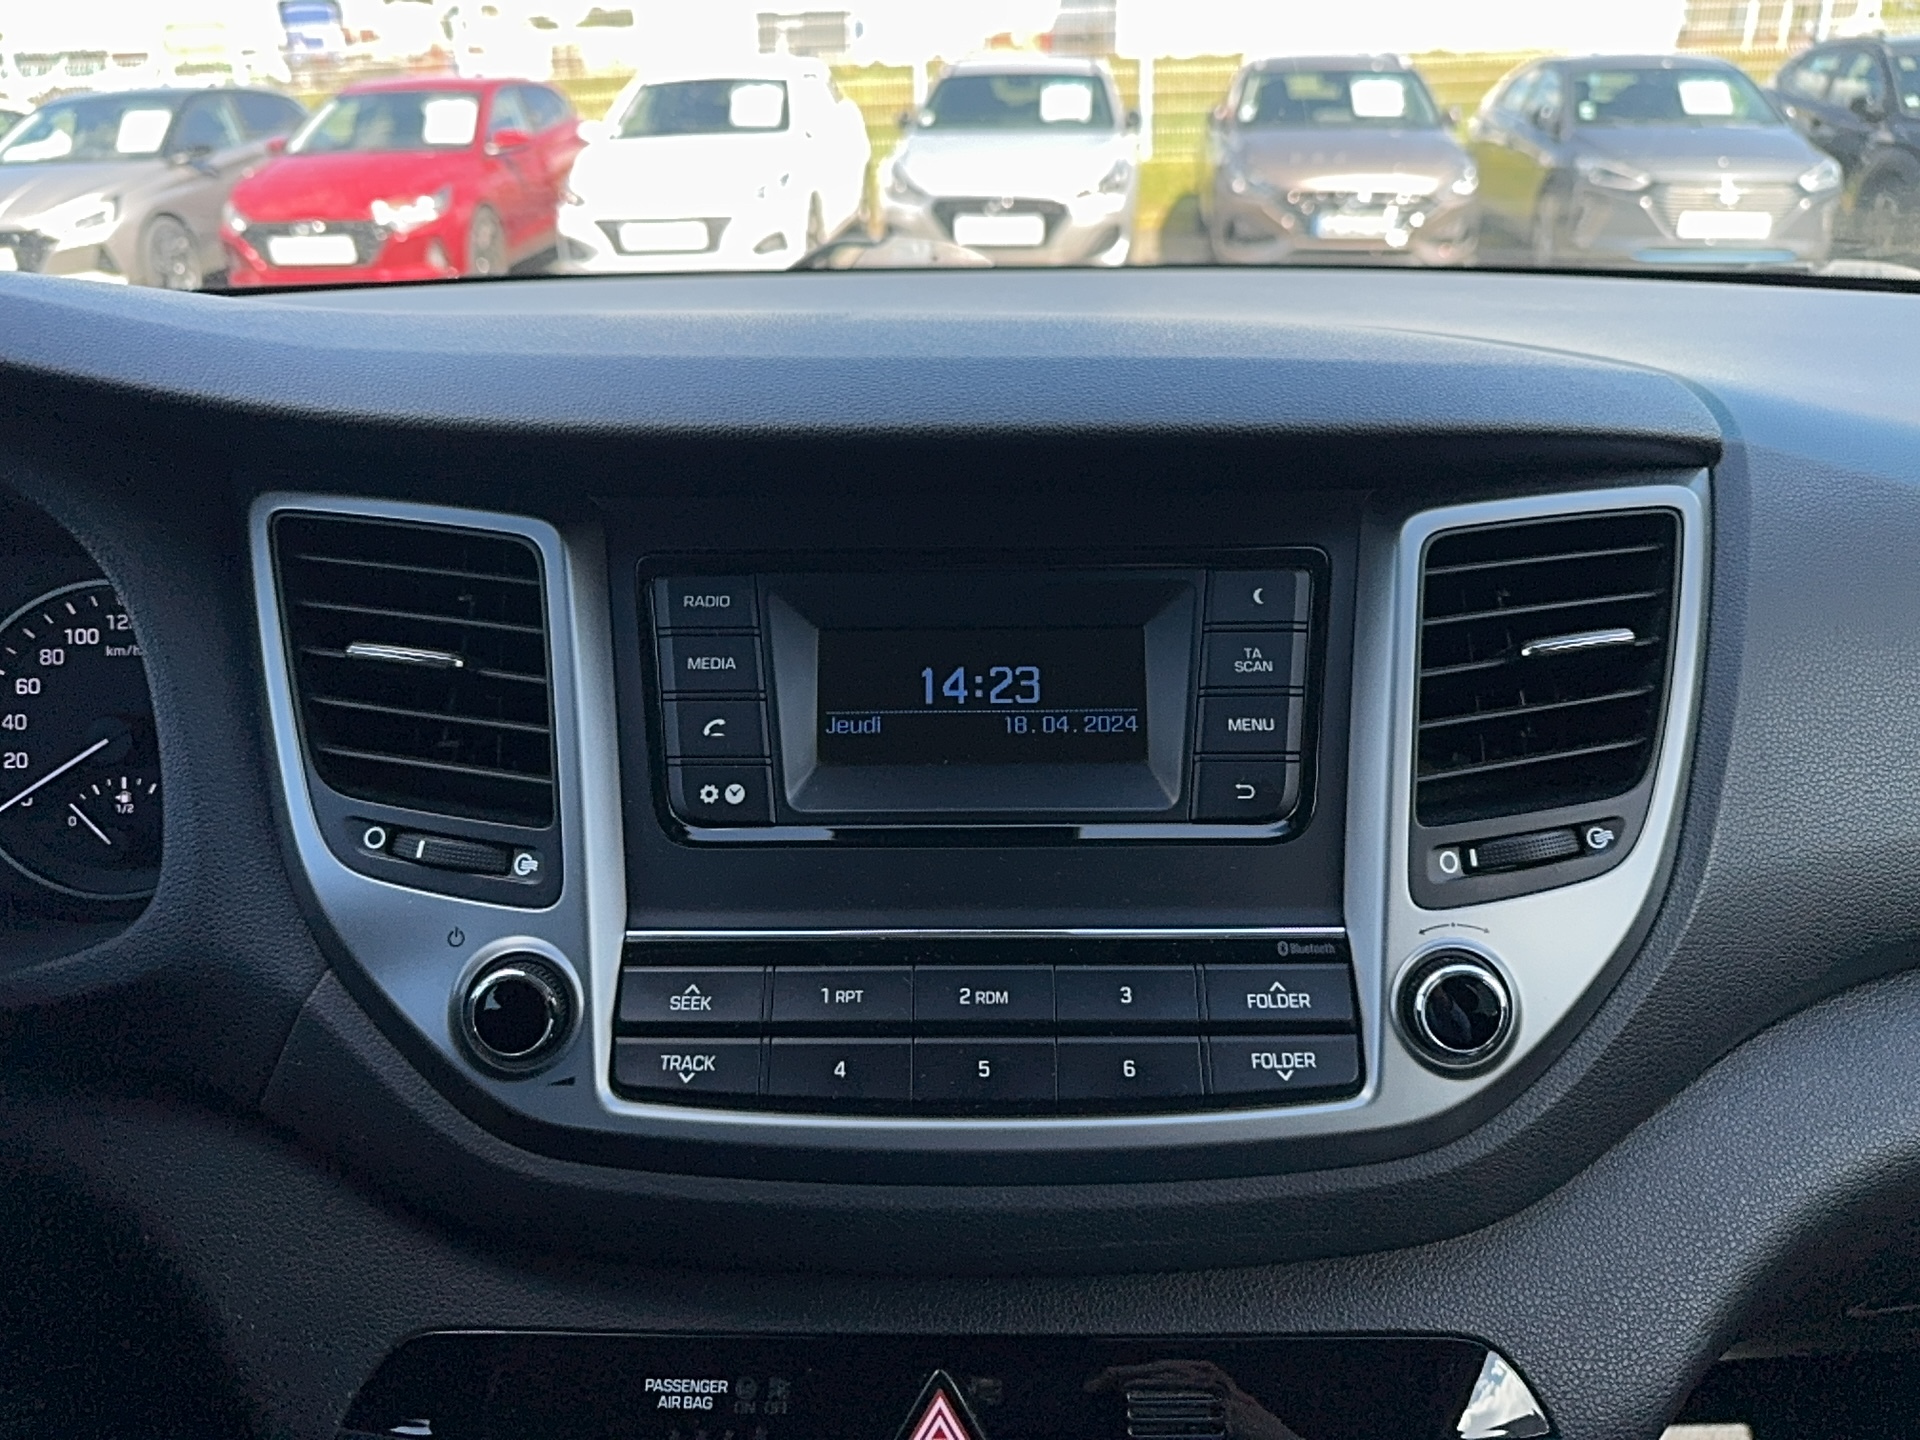 HYUNDAI Tucson 1.7 CRDi 115 2WD Intuitive - Véhicule Occasion Océane Auto